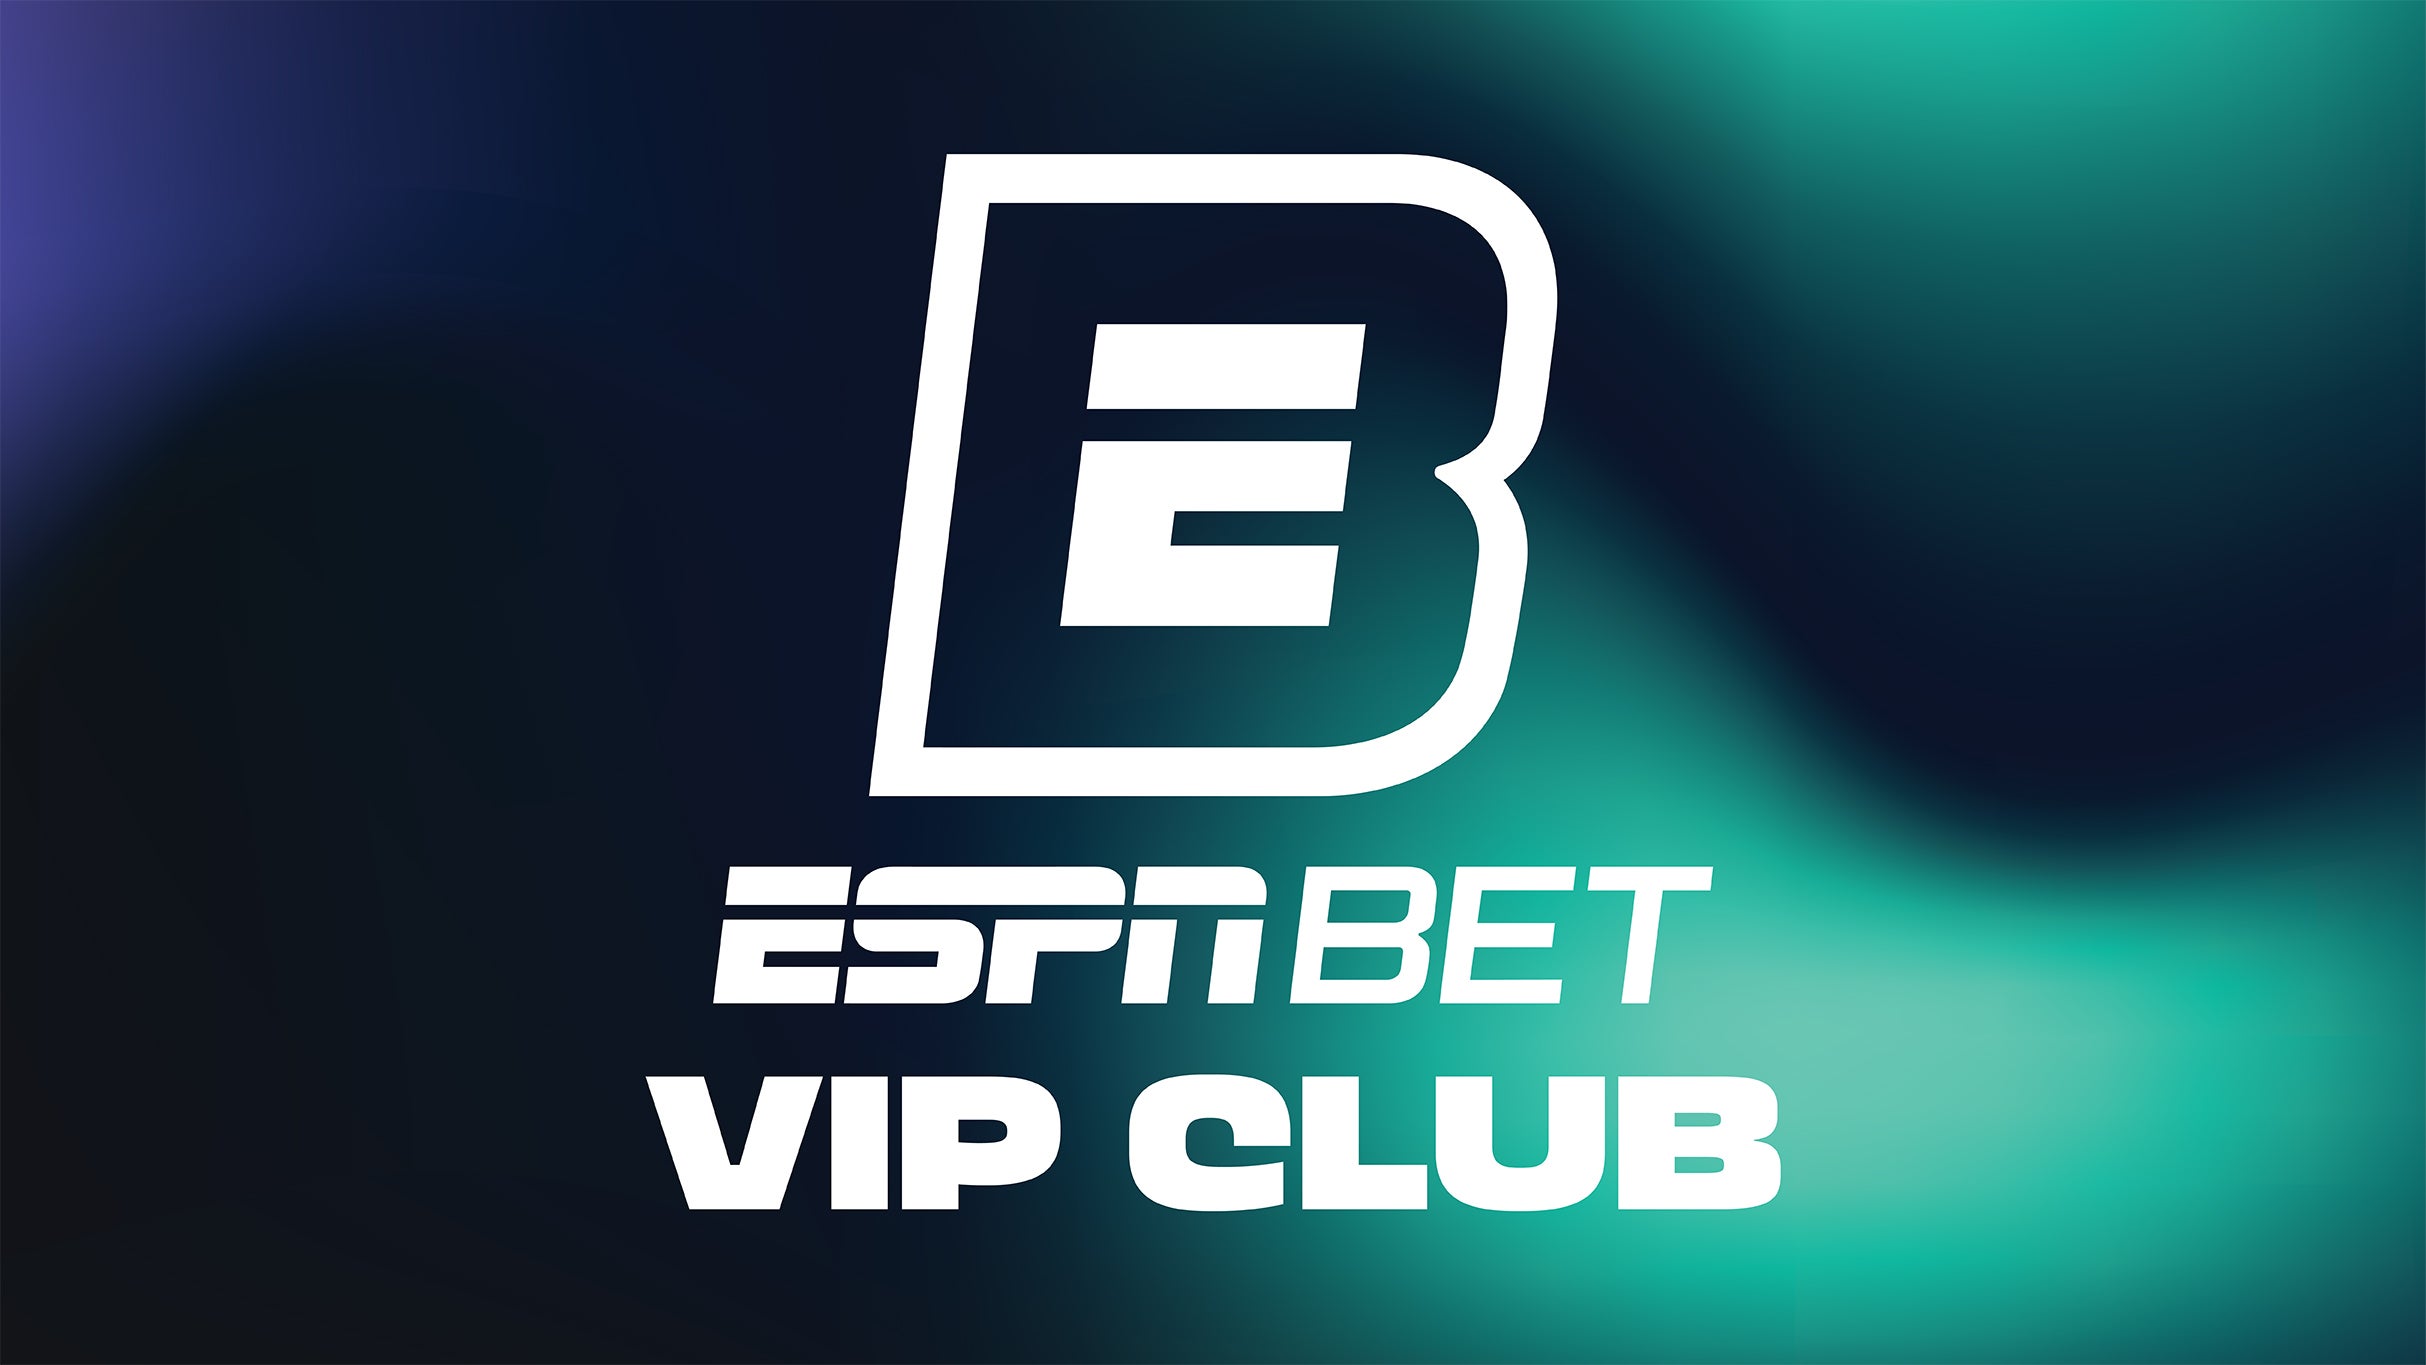 ESPN Bet VIP Club presale information on freepresalepasswords.com